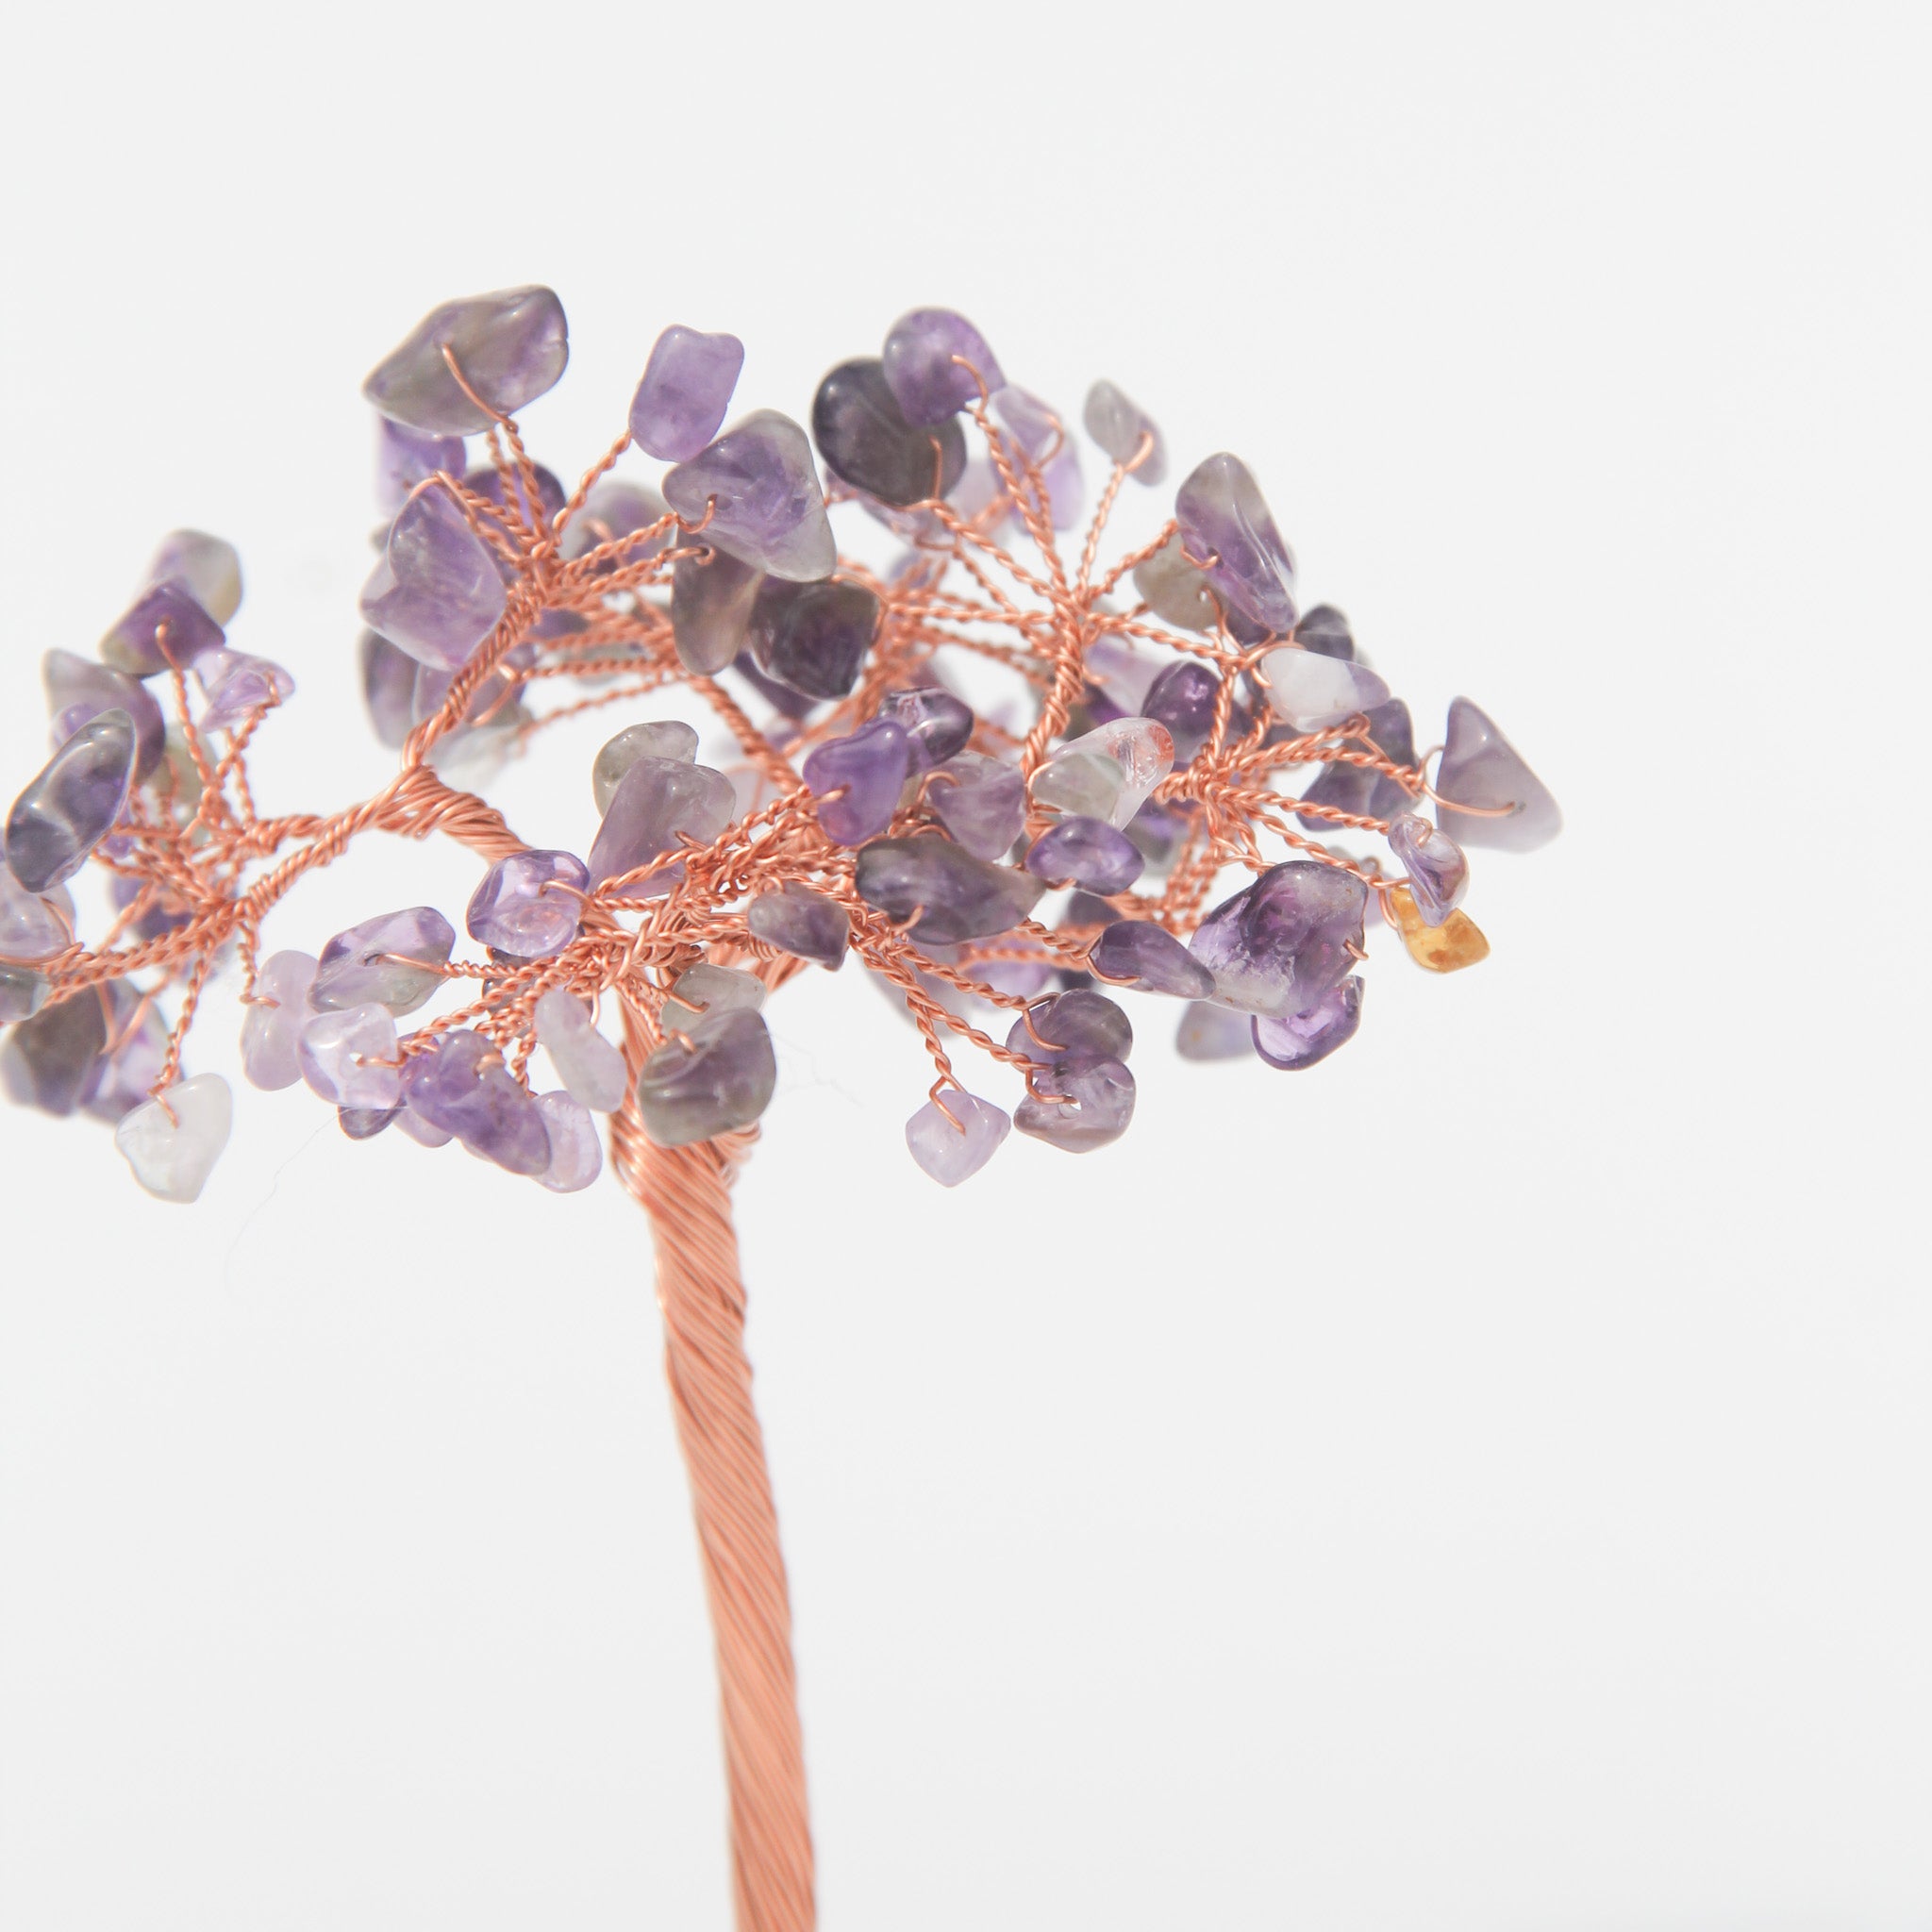 Amethyst Healing Mini Crystal Tree